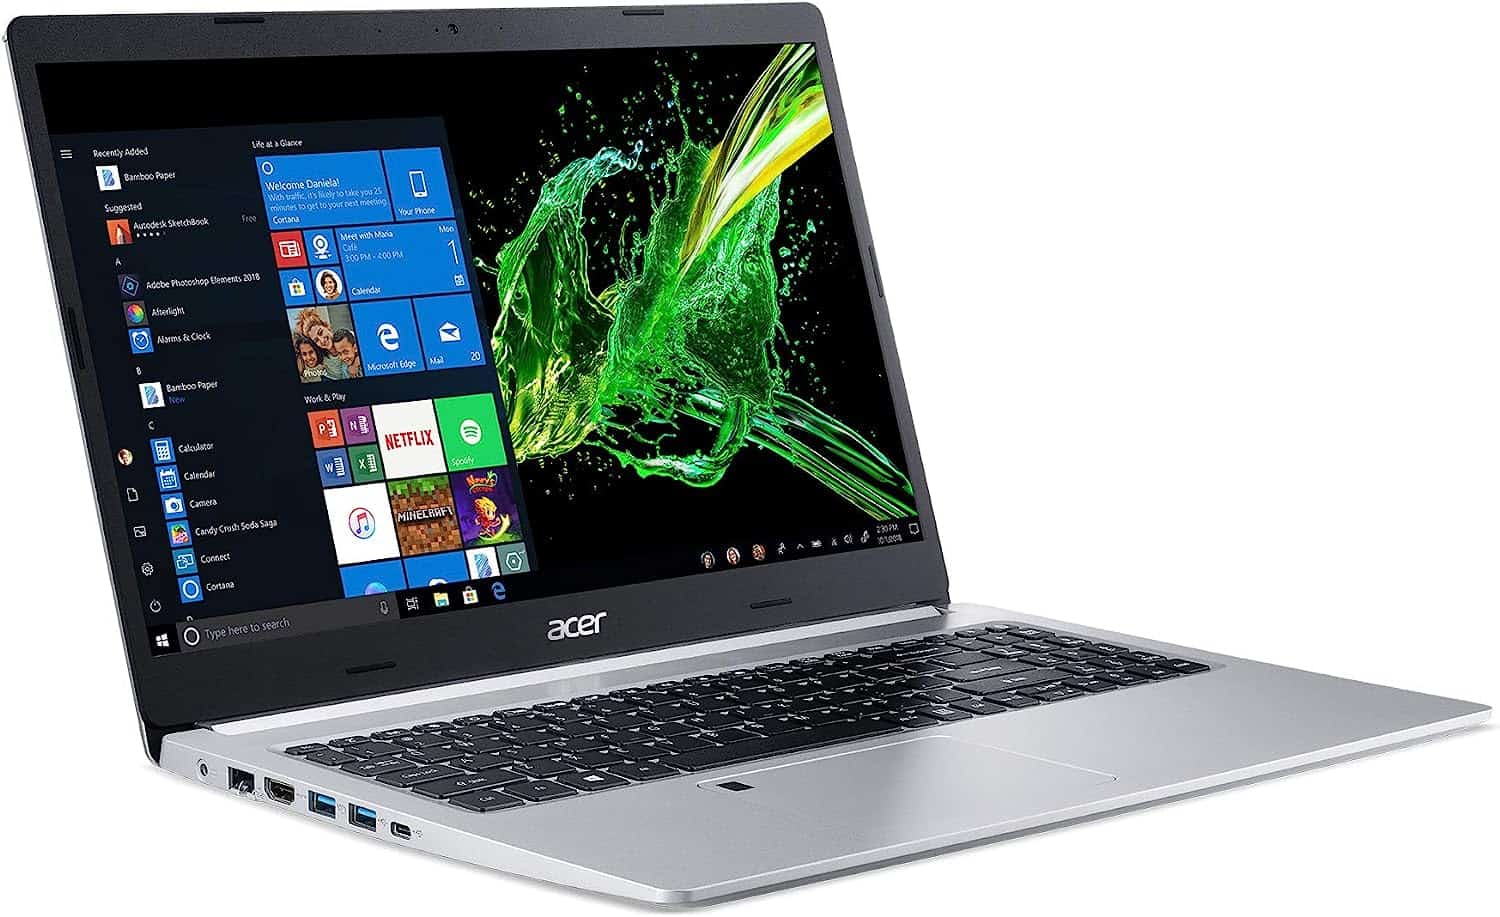 Acer Aspire 5 59W2